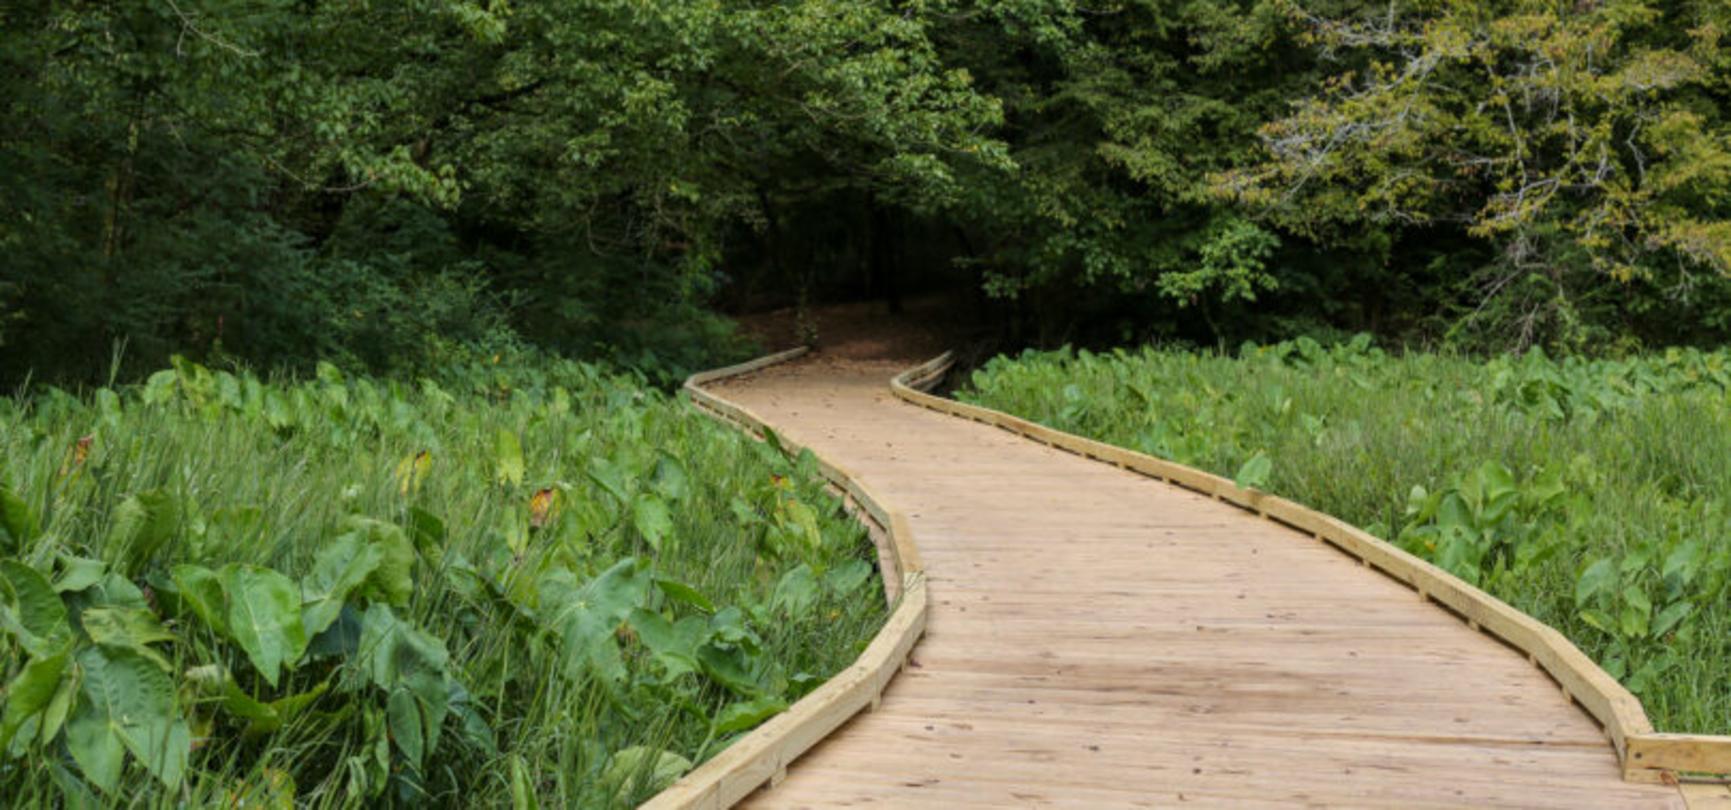 Souvenir protein Beregning Botanical Garden Nature Trails Now More Accessible